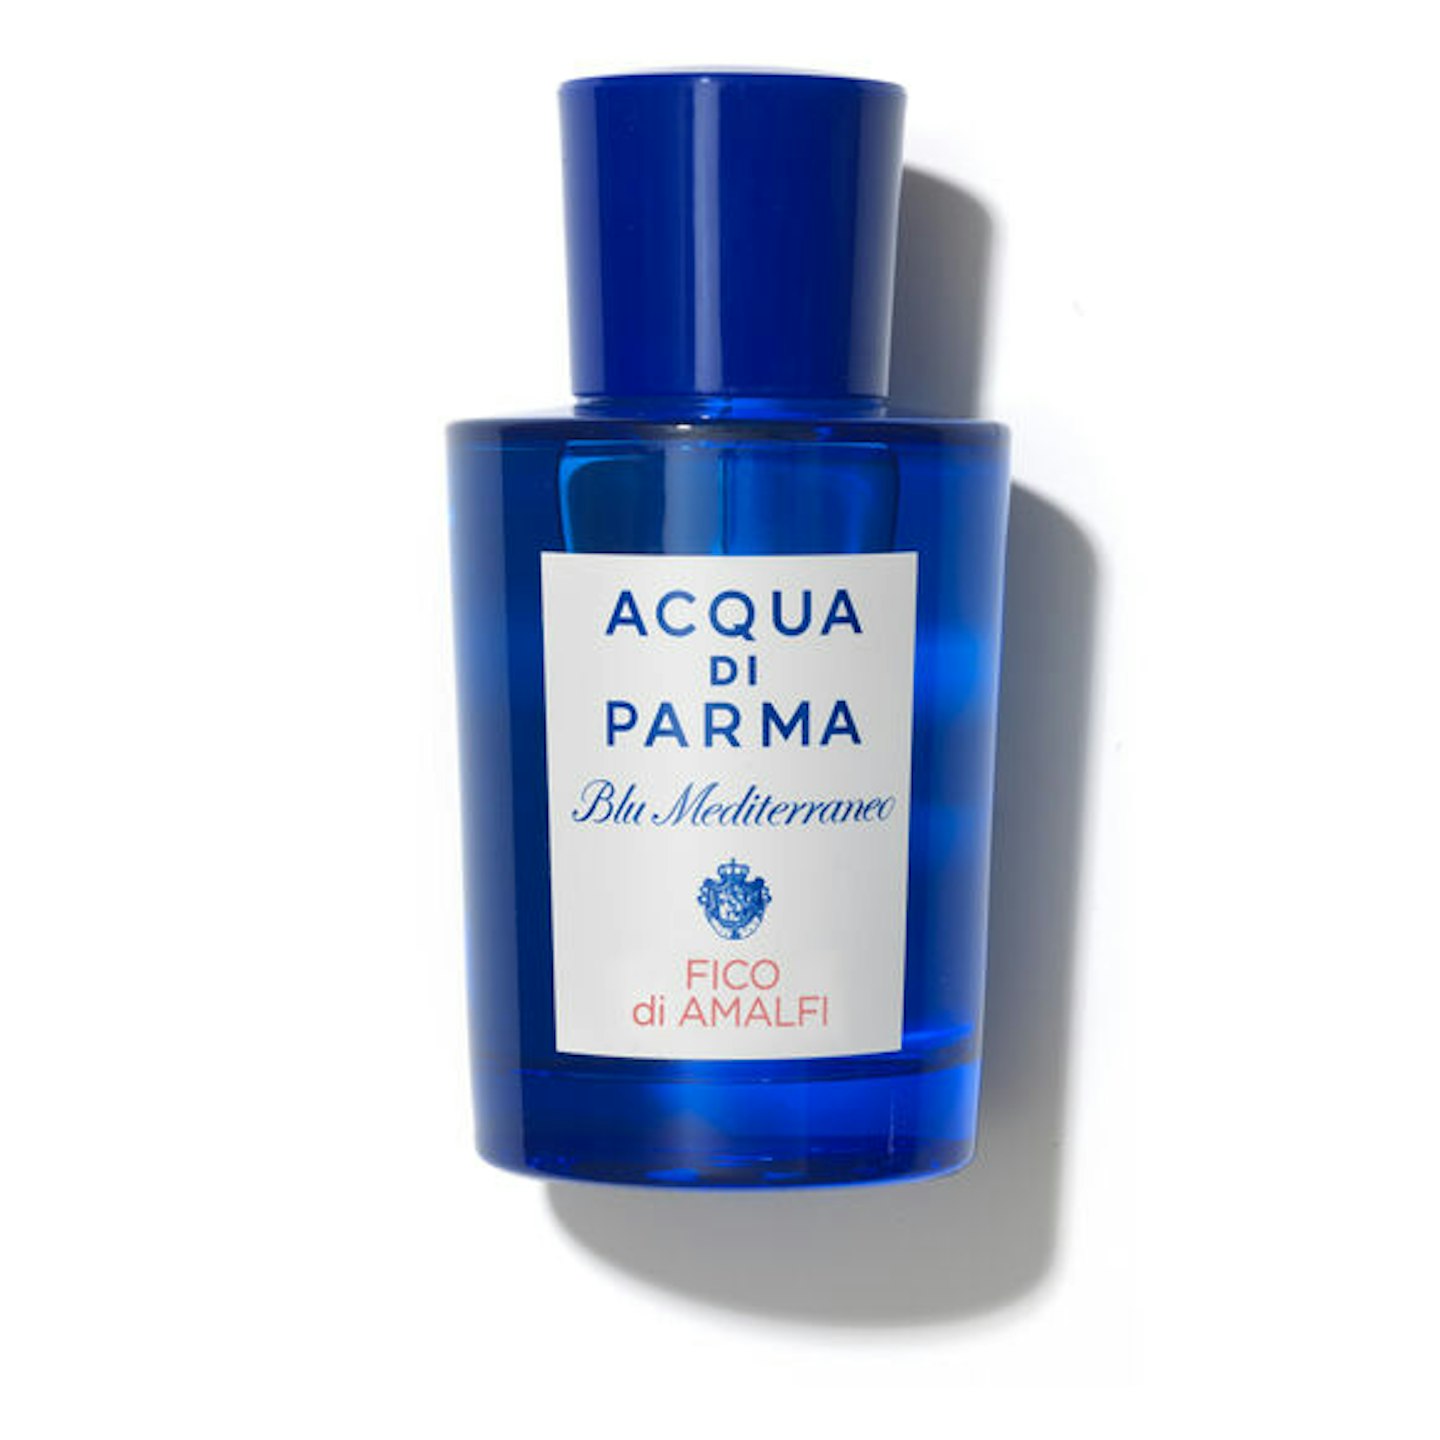 Aqua Di Parma’s Blu Mediterraneo Fico di Amalfi Eau de Toilette  dupe